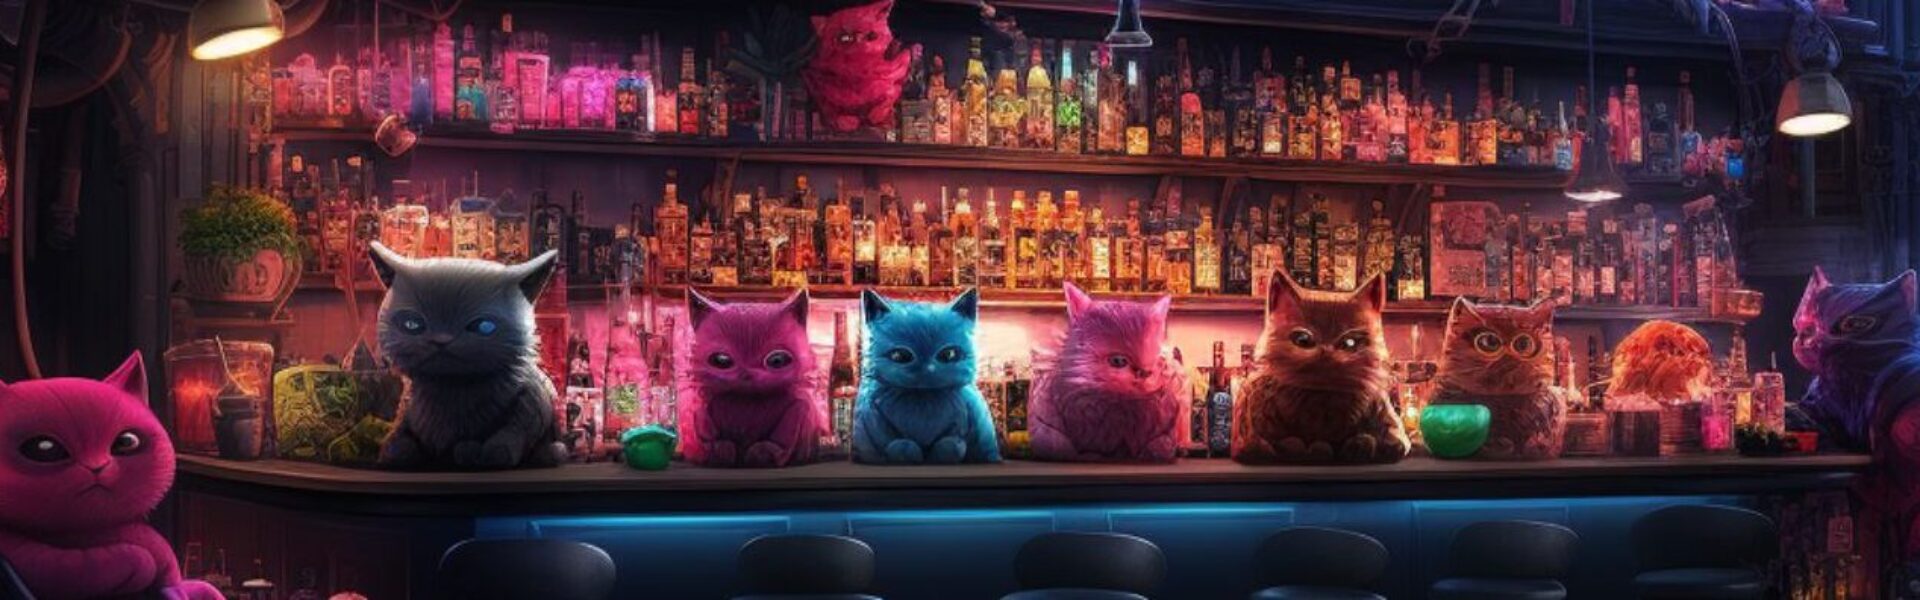 Wonderland Press - Futuristic Speakeasy Website Header - Glowing cats above a bar full of neon drinks